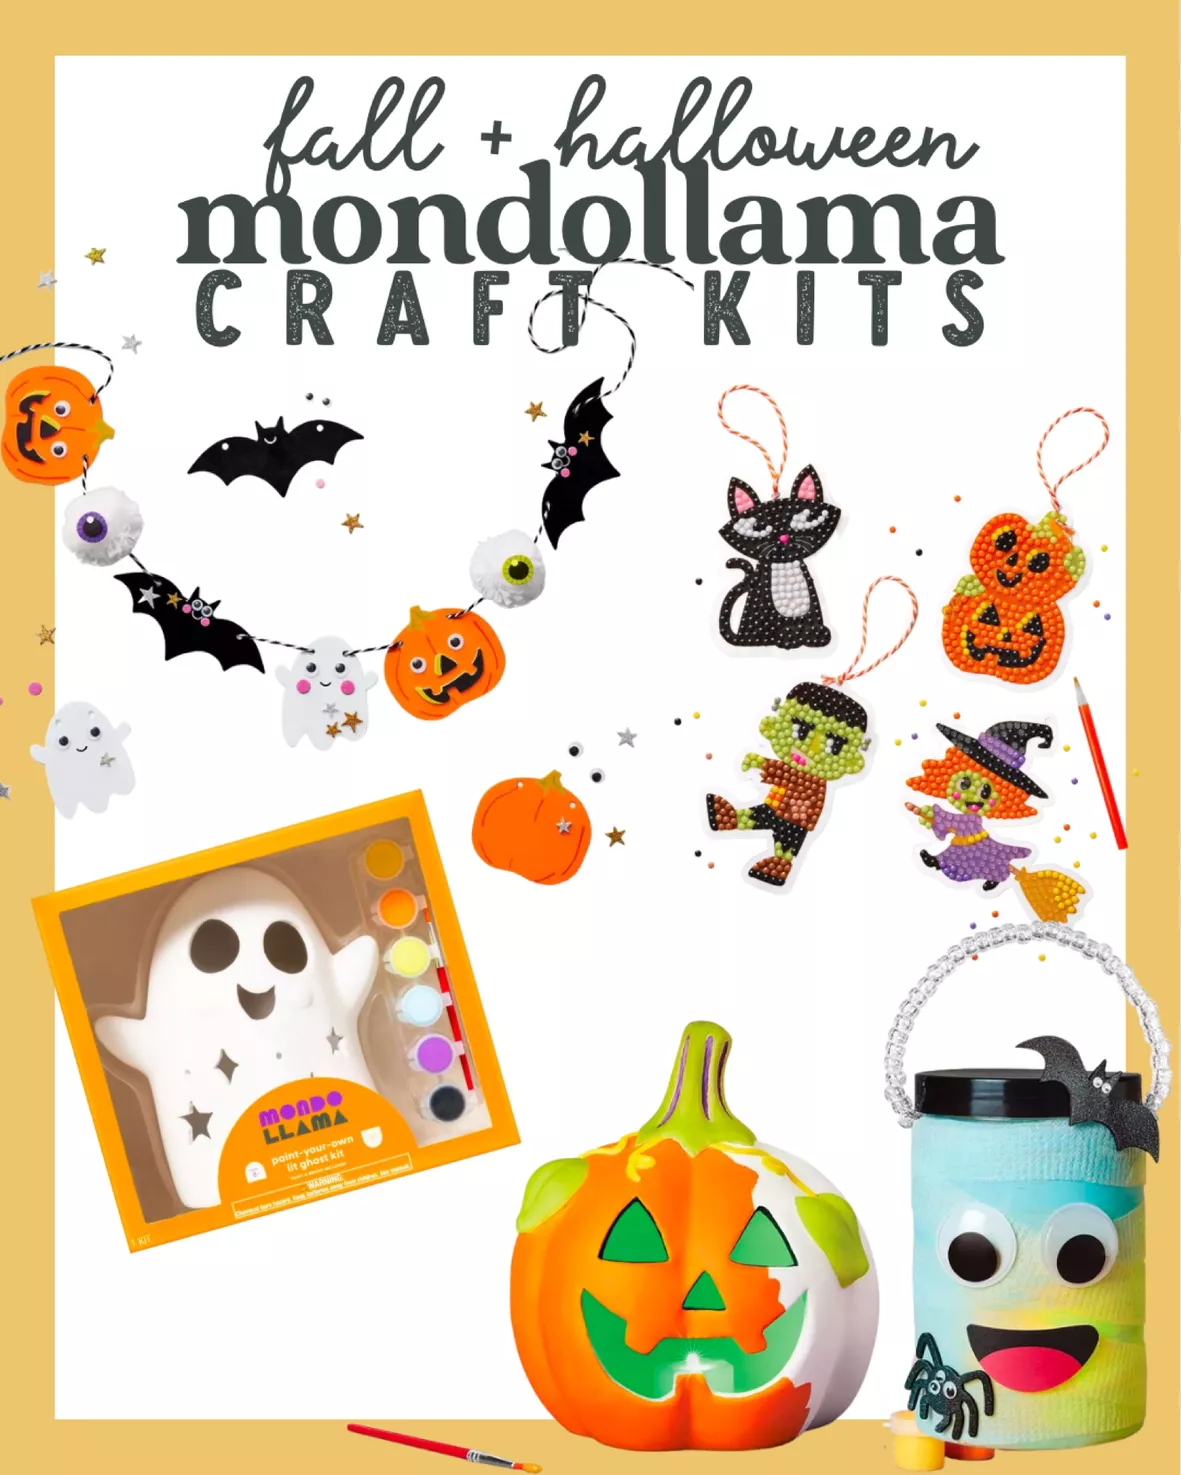  Create-Your-Own Paper Mache Rainbow Collage Kit - Mondo Llama